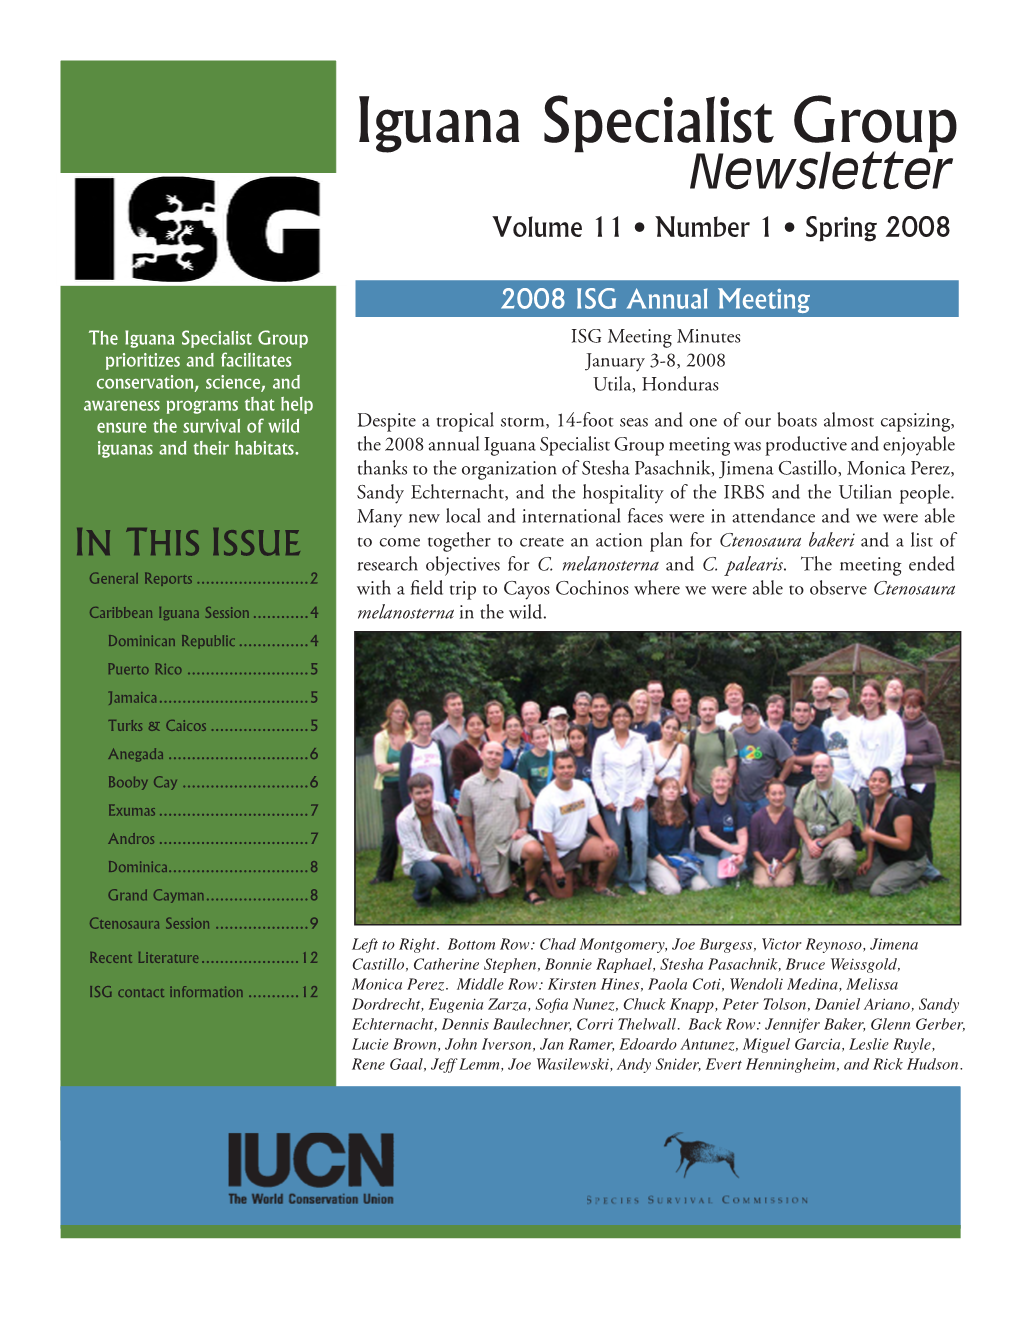 ISG News 11(1).Indd